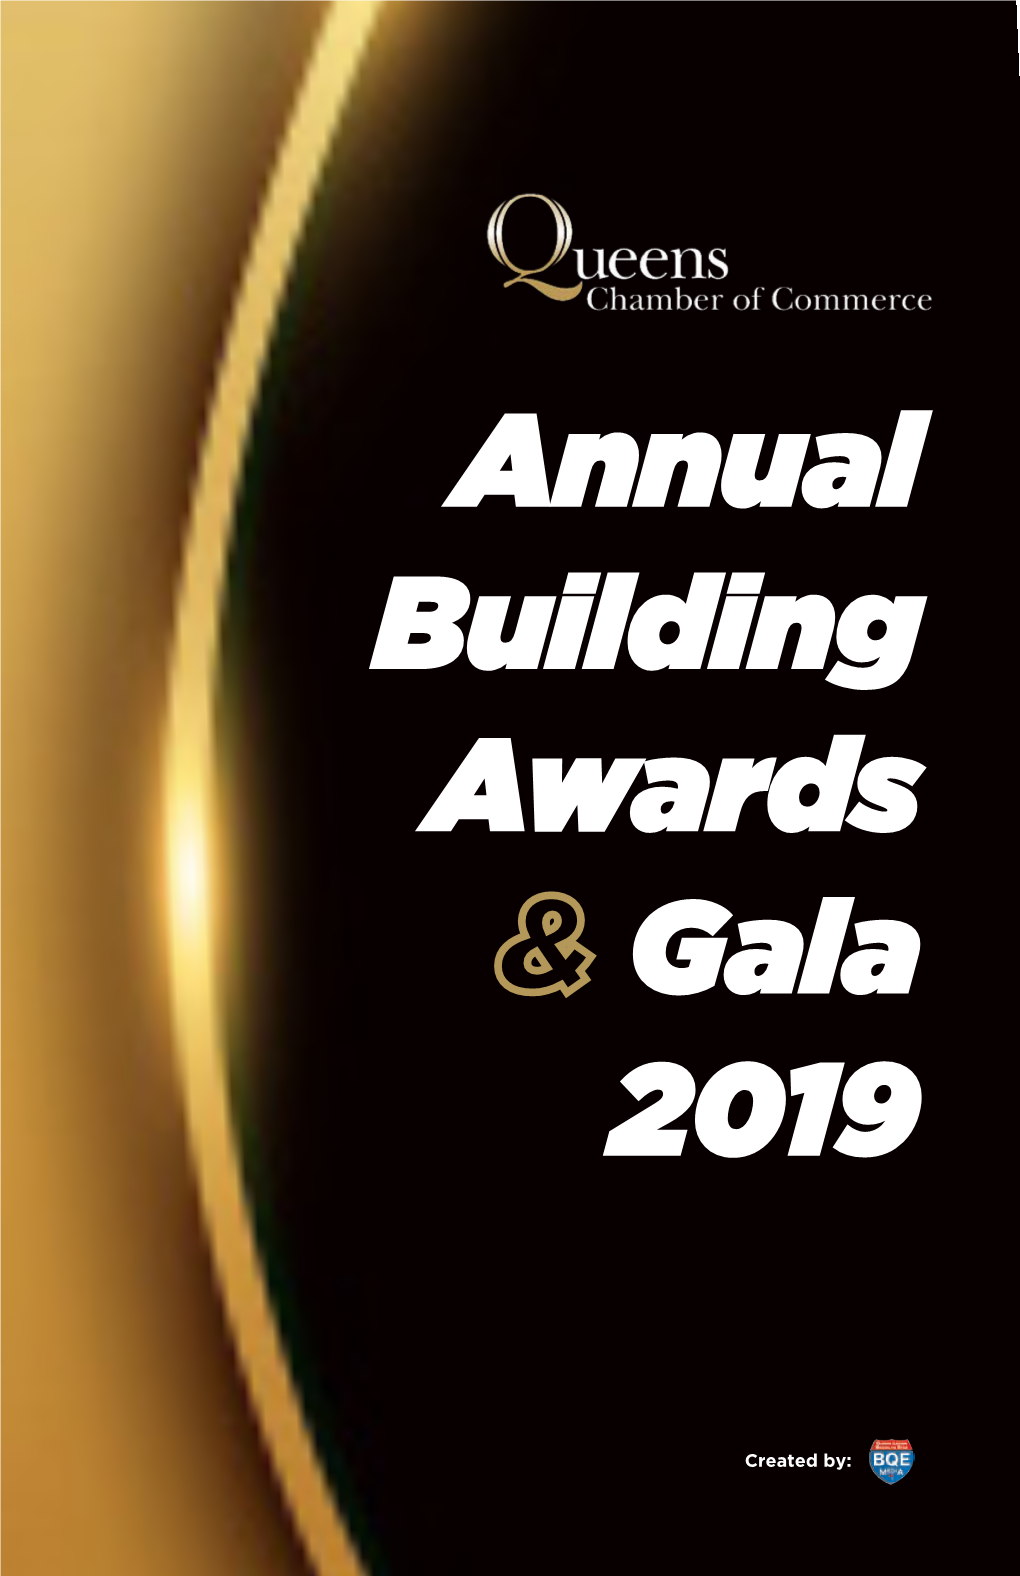 Annual Building Awards Gala 2019